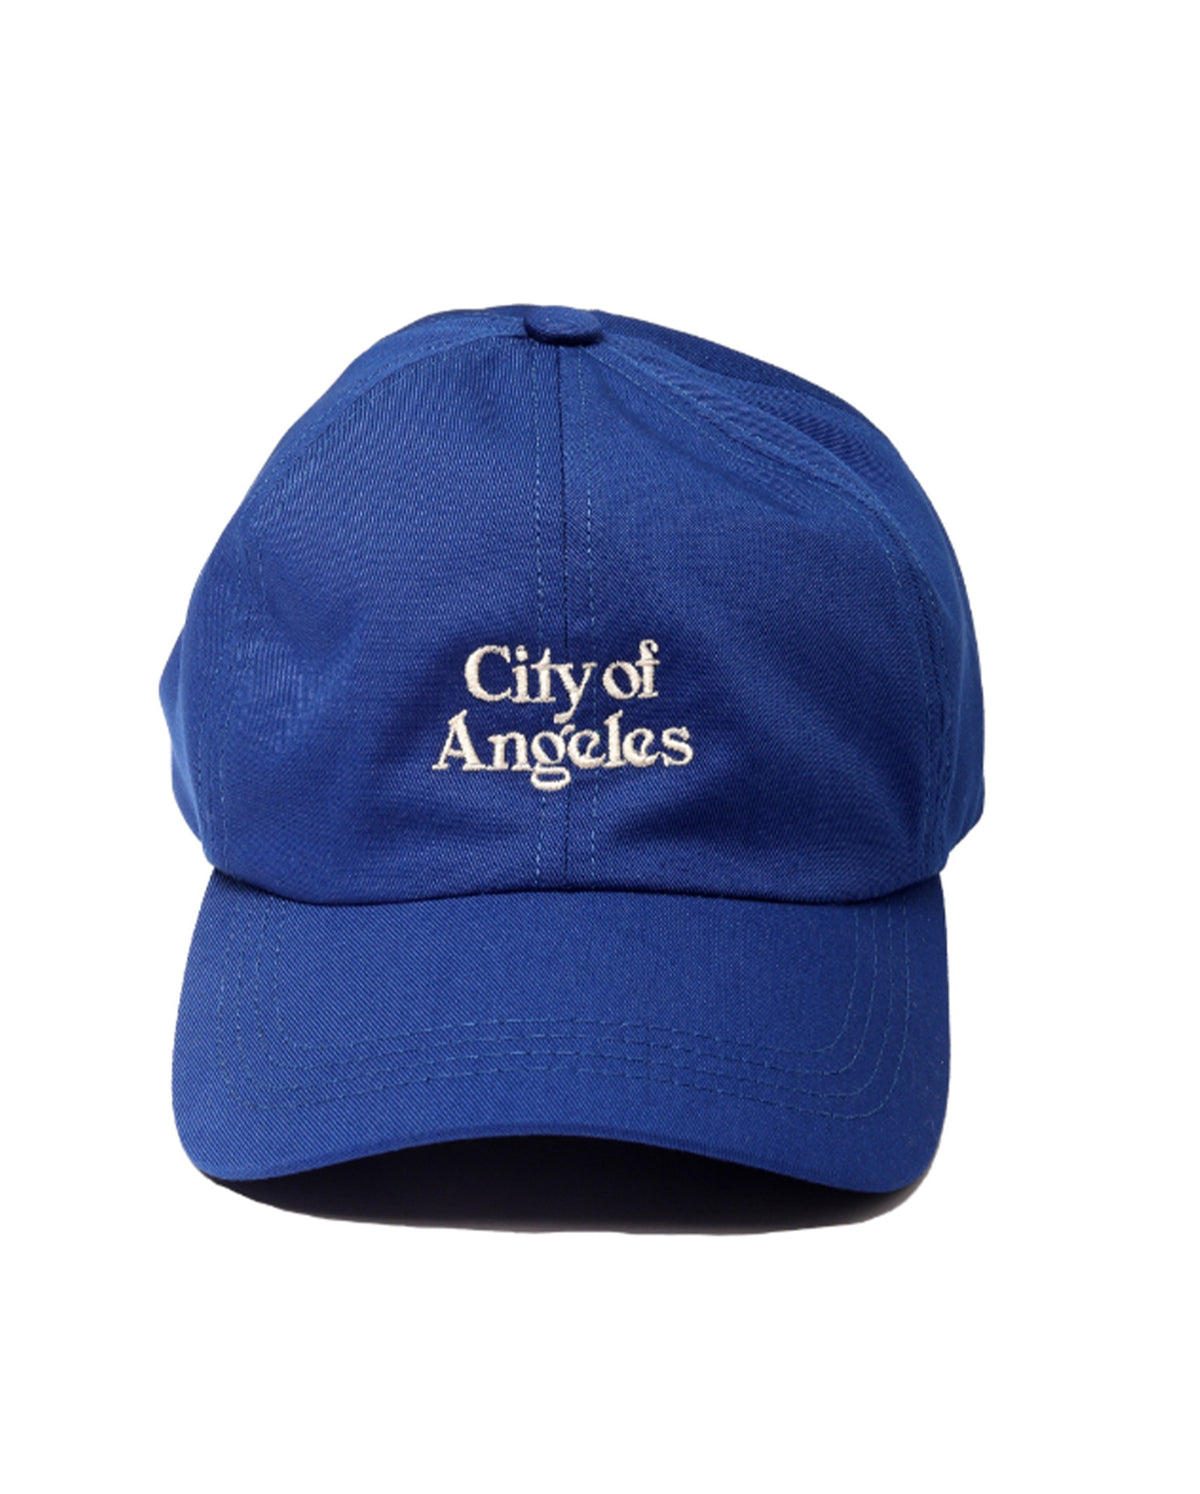 City Of Angeles Cap - Dodger Blue